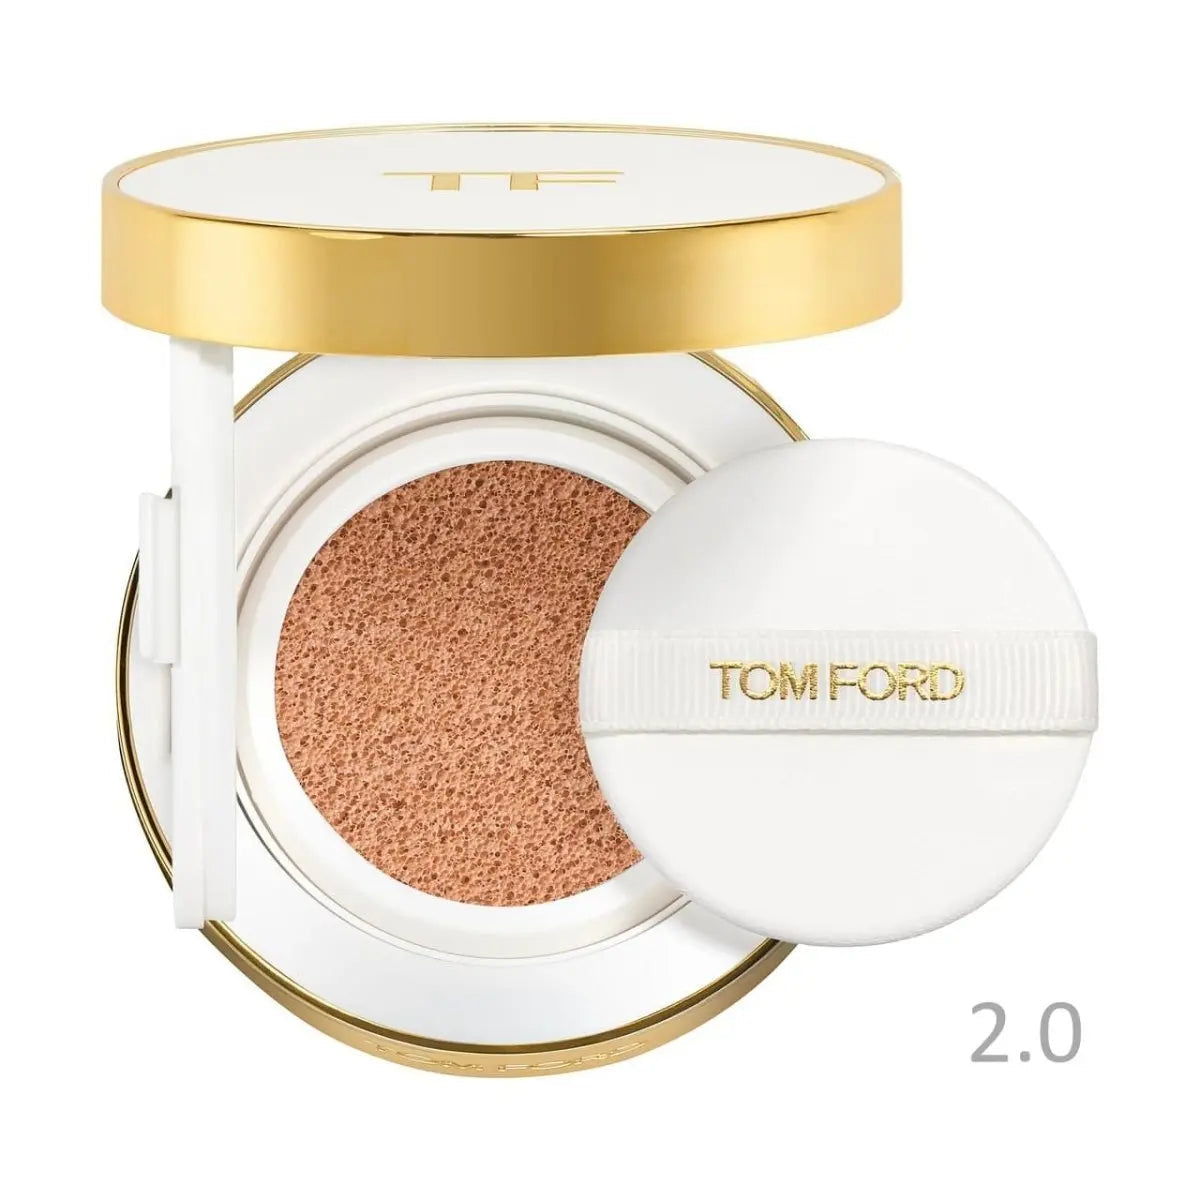 Tom Ford Tom Ford Glow Tone Up base de maquillaje hidratante compacta cojín acolchado Spf40 Buff